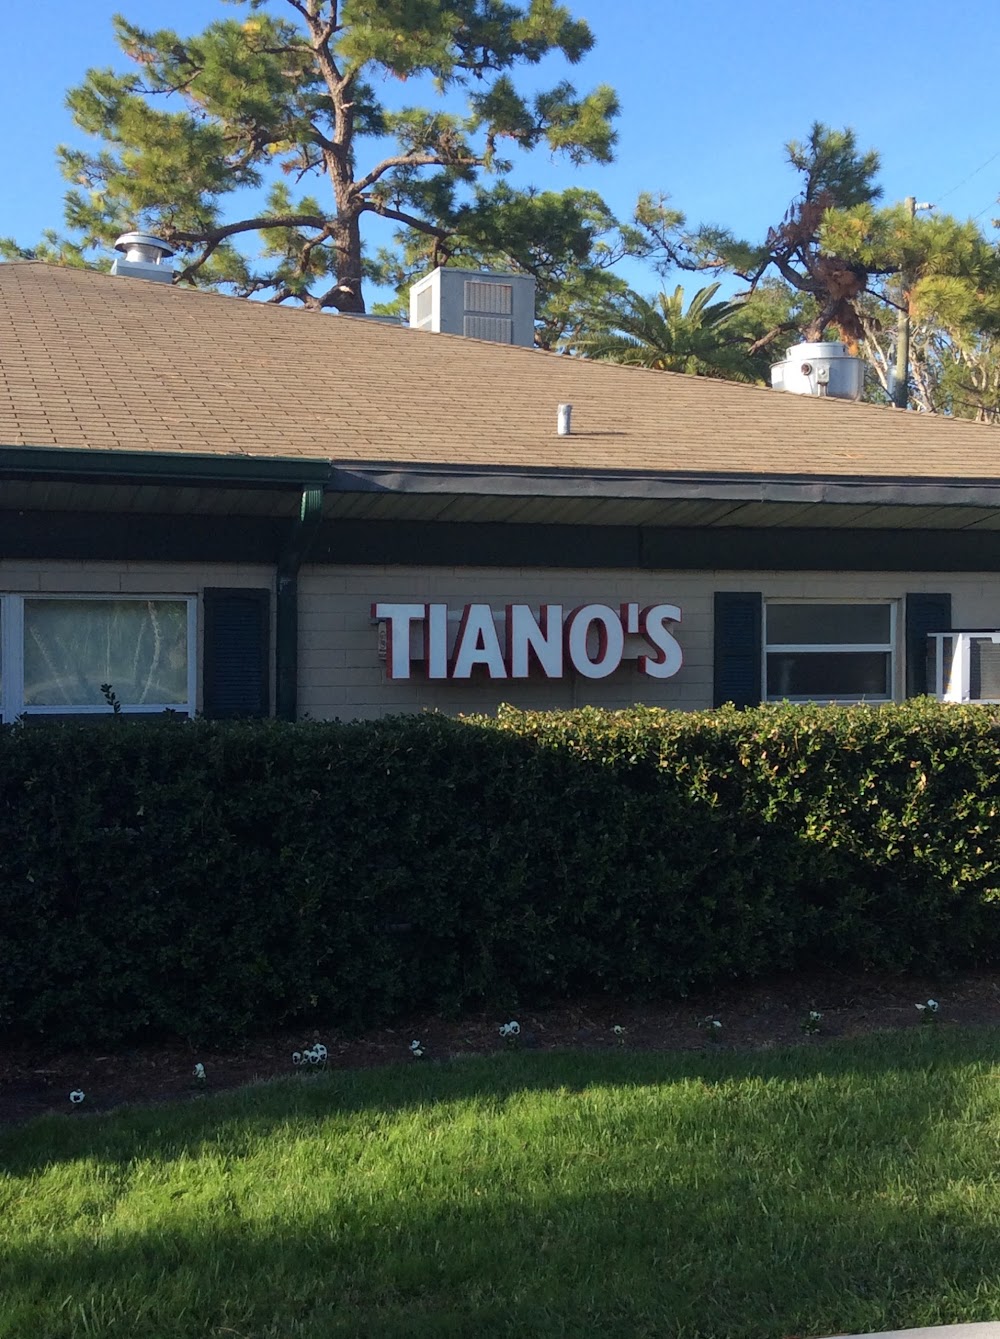 Tiano's Italian Restaurant, New Smyrna Beach, Volusia County, Florida,...